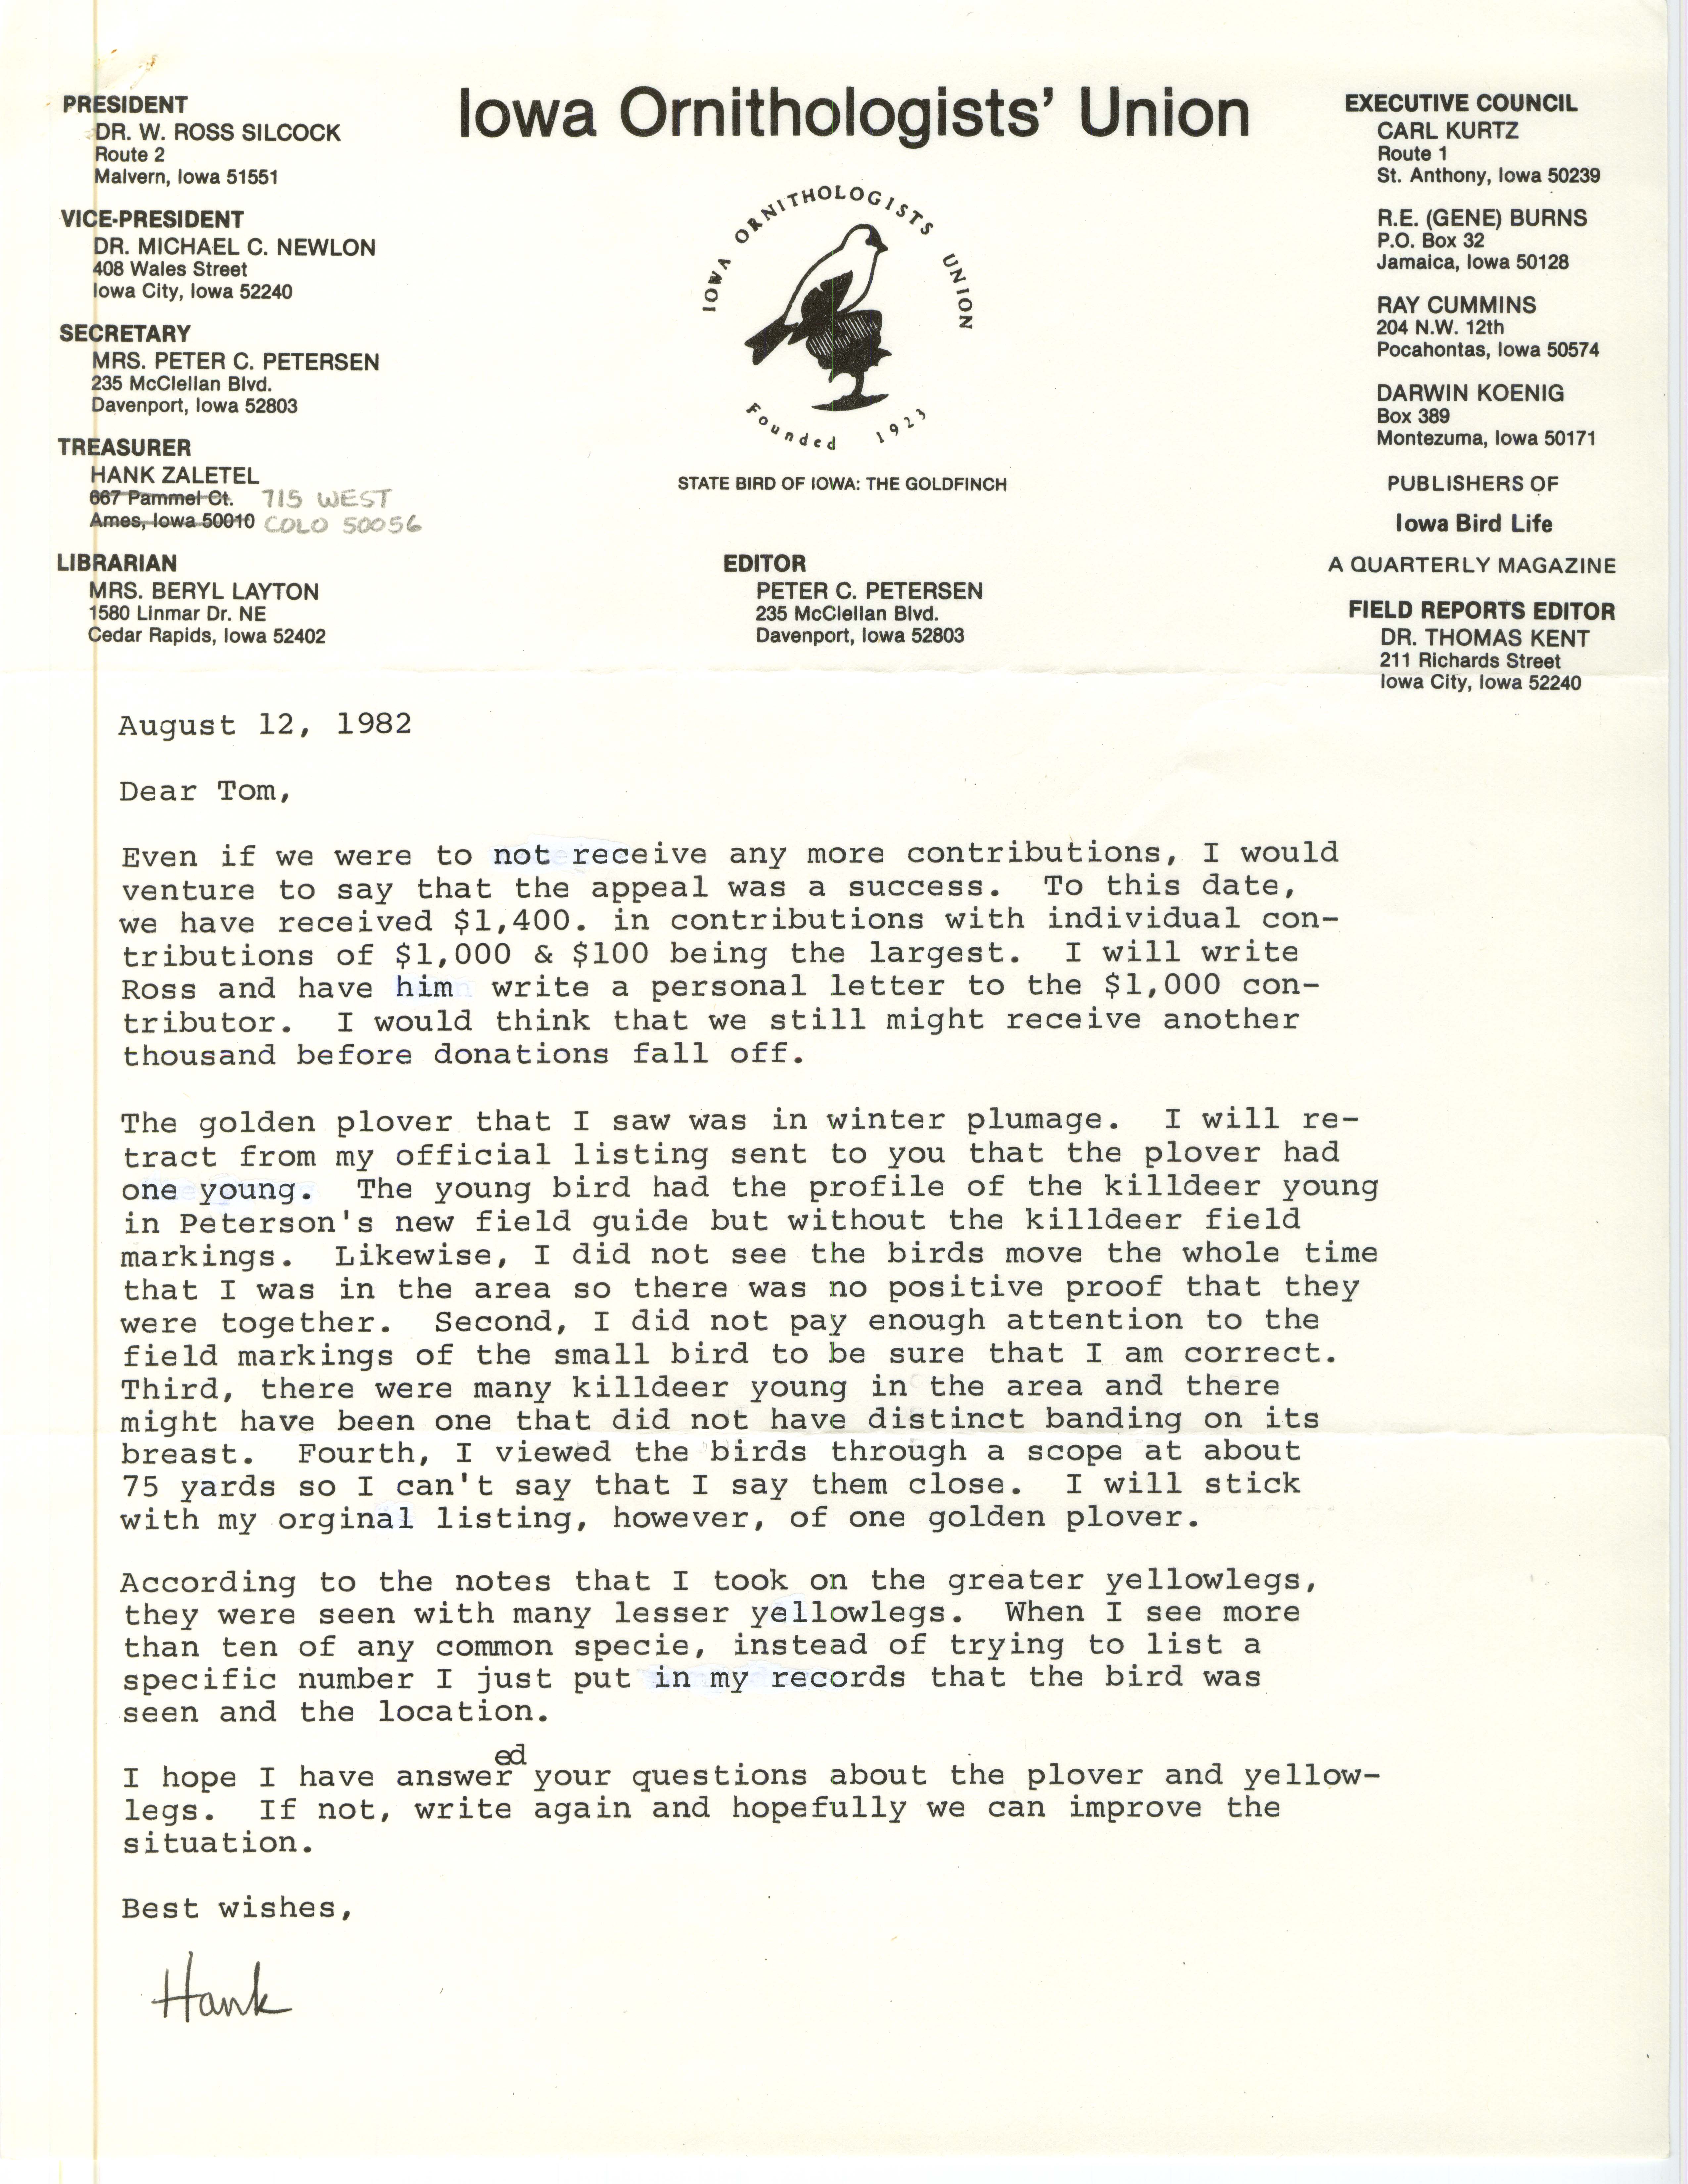 Hank Zaletel letter to Thomas H. Kent regarding a report of a Golden Plover, August 12, 1982